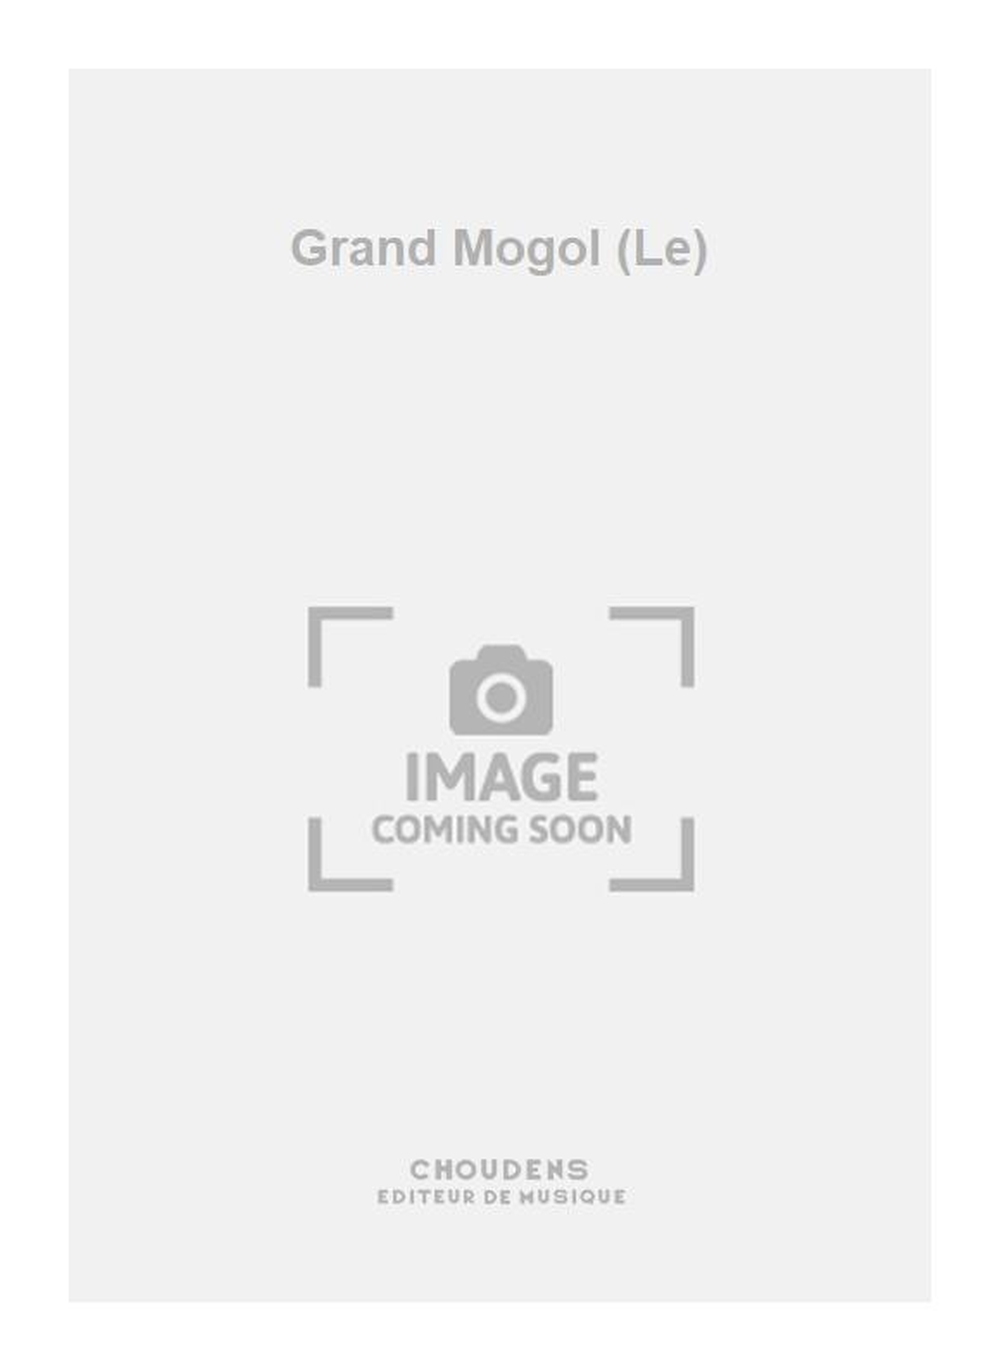 Audran: Grand Mogol (Le)